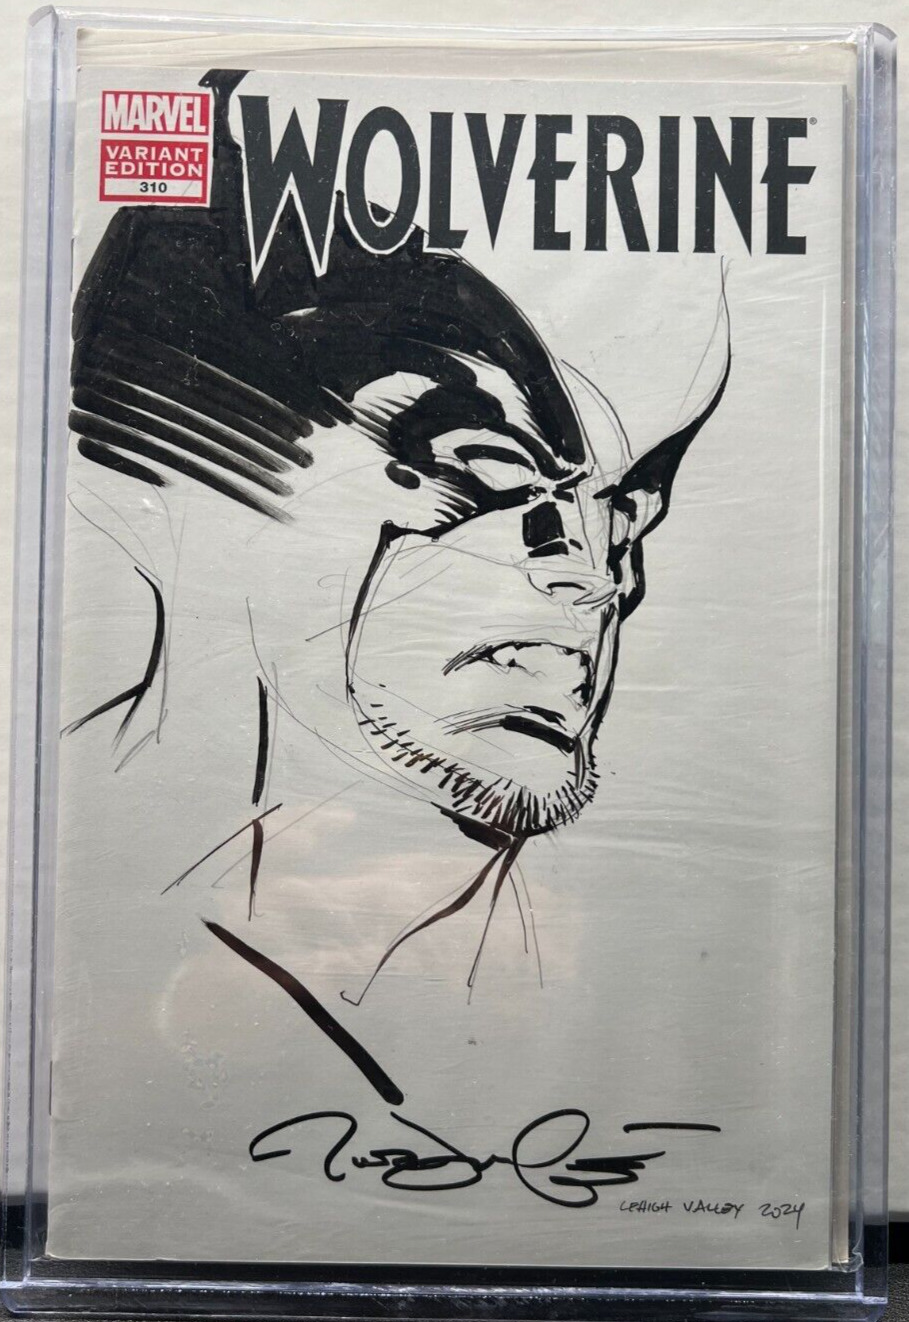 Original Wolverine Sketch Cover by Artists Rick Leonardi on Wolverine #310 Blank